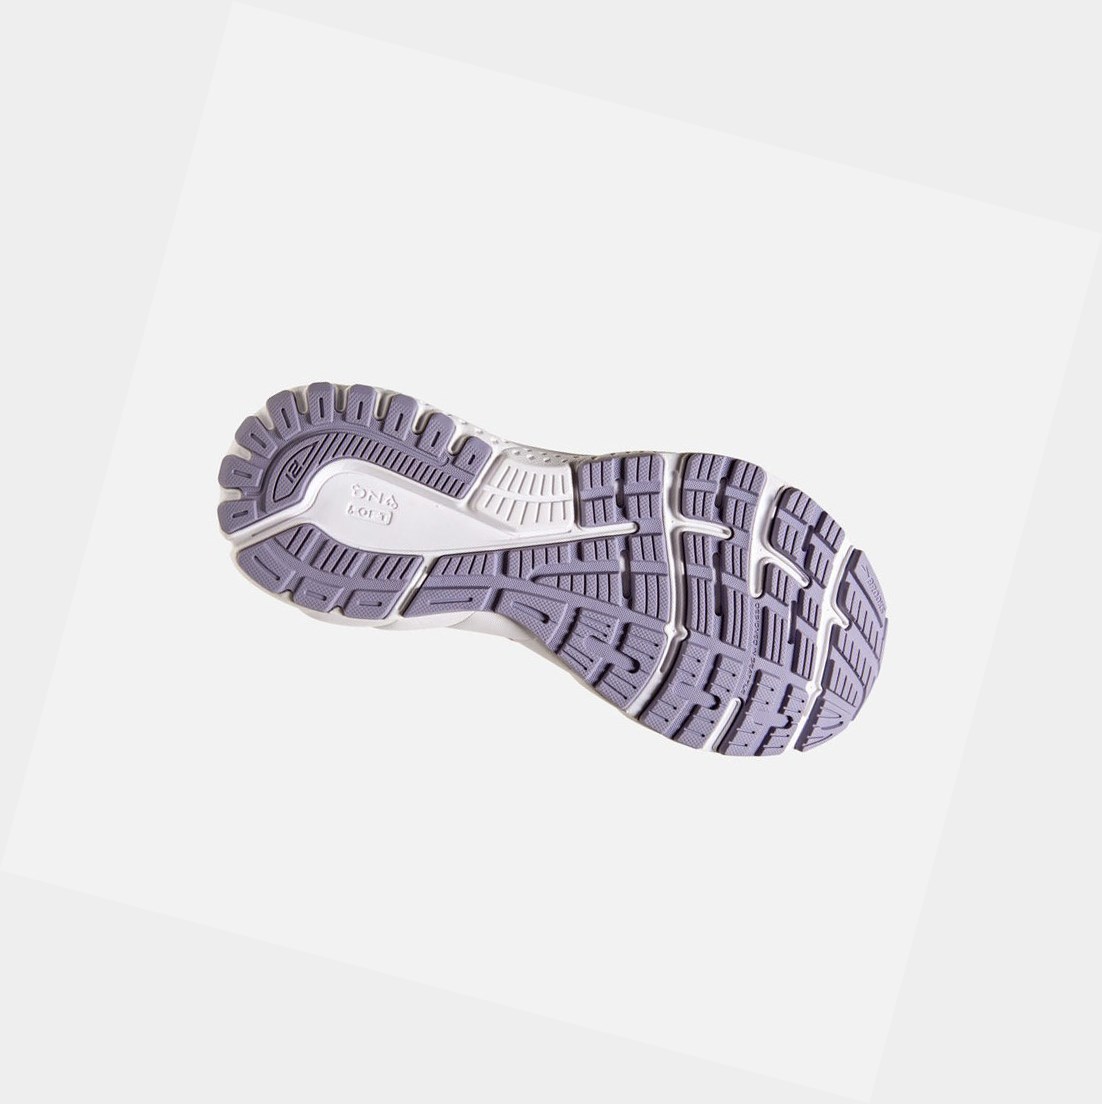 Brooks Adrenaline GTS 21 Women's Road Running Shoes Iris / Lilac Scachet / Ombre Blue | WEMZ-03154